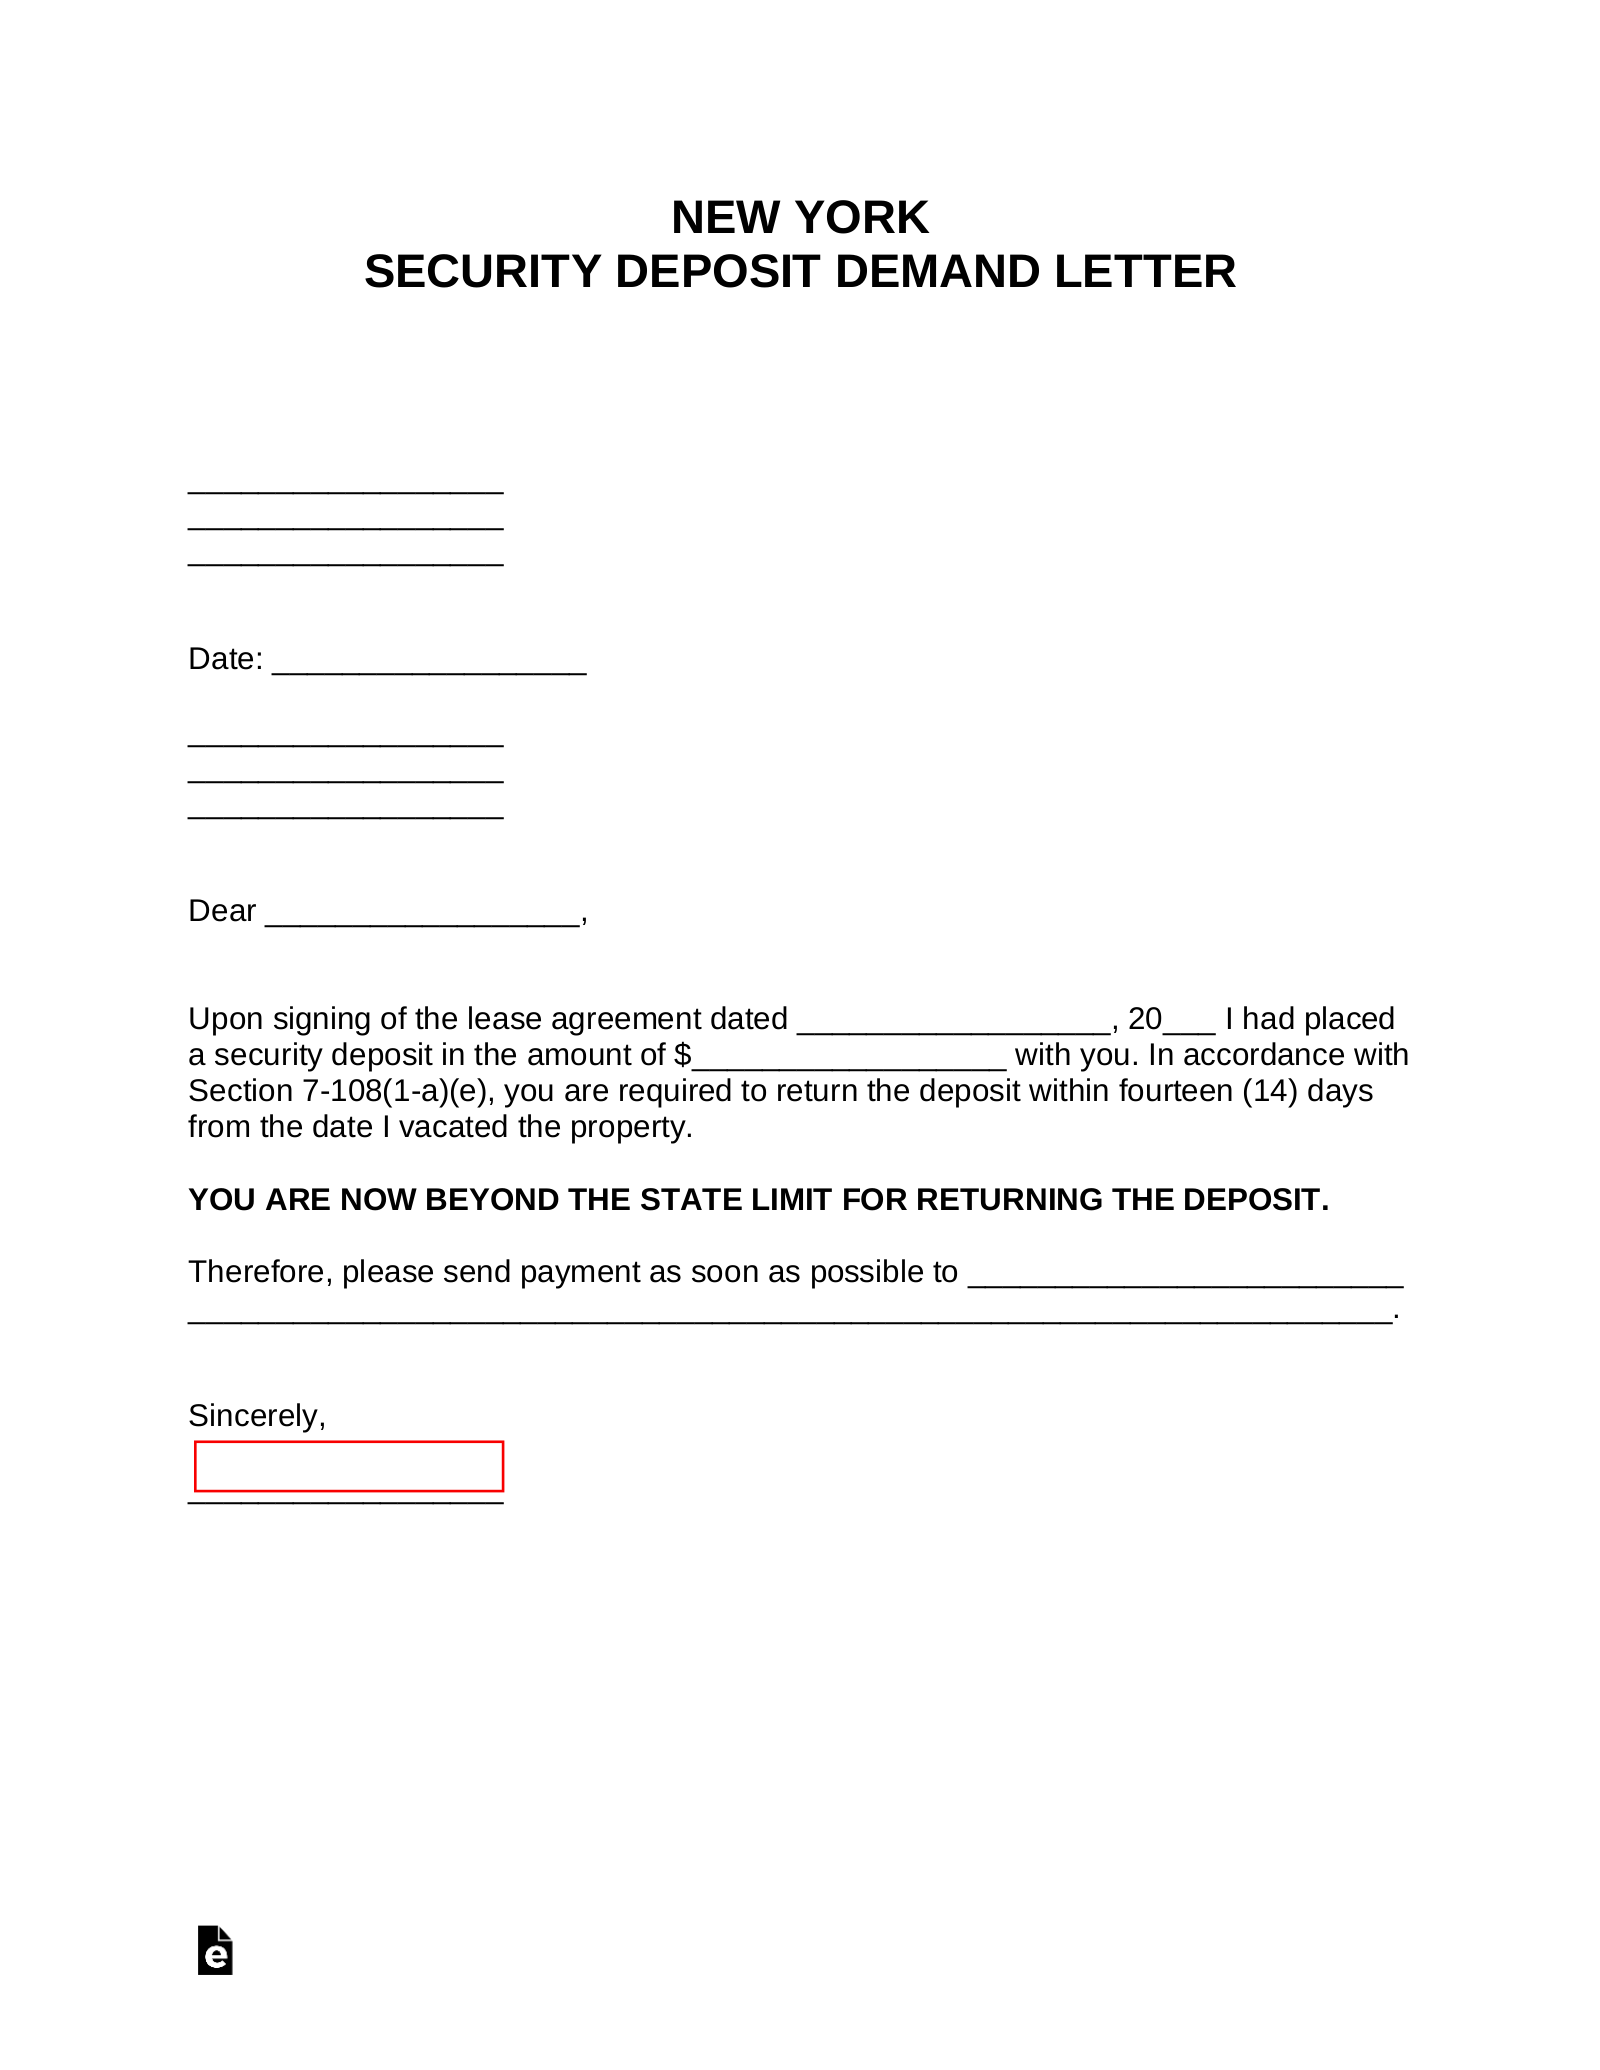 New York Security Deposit Demand Letter